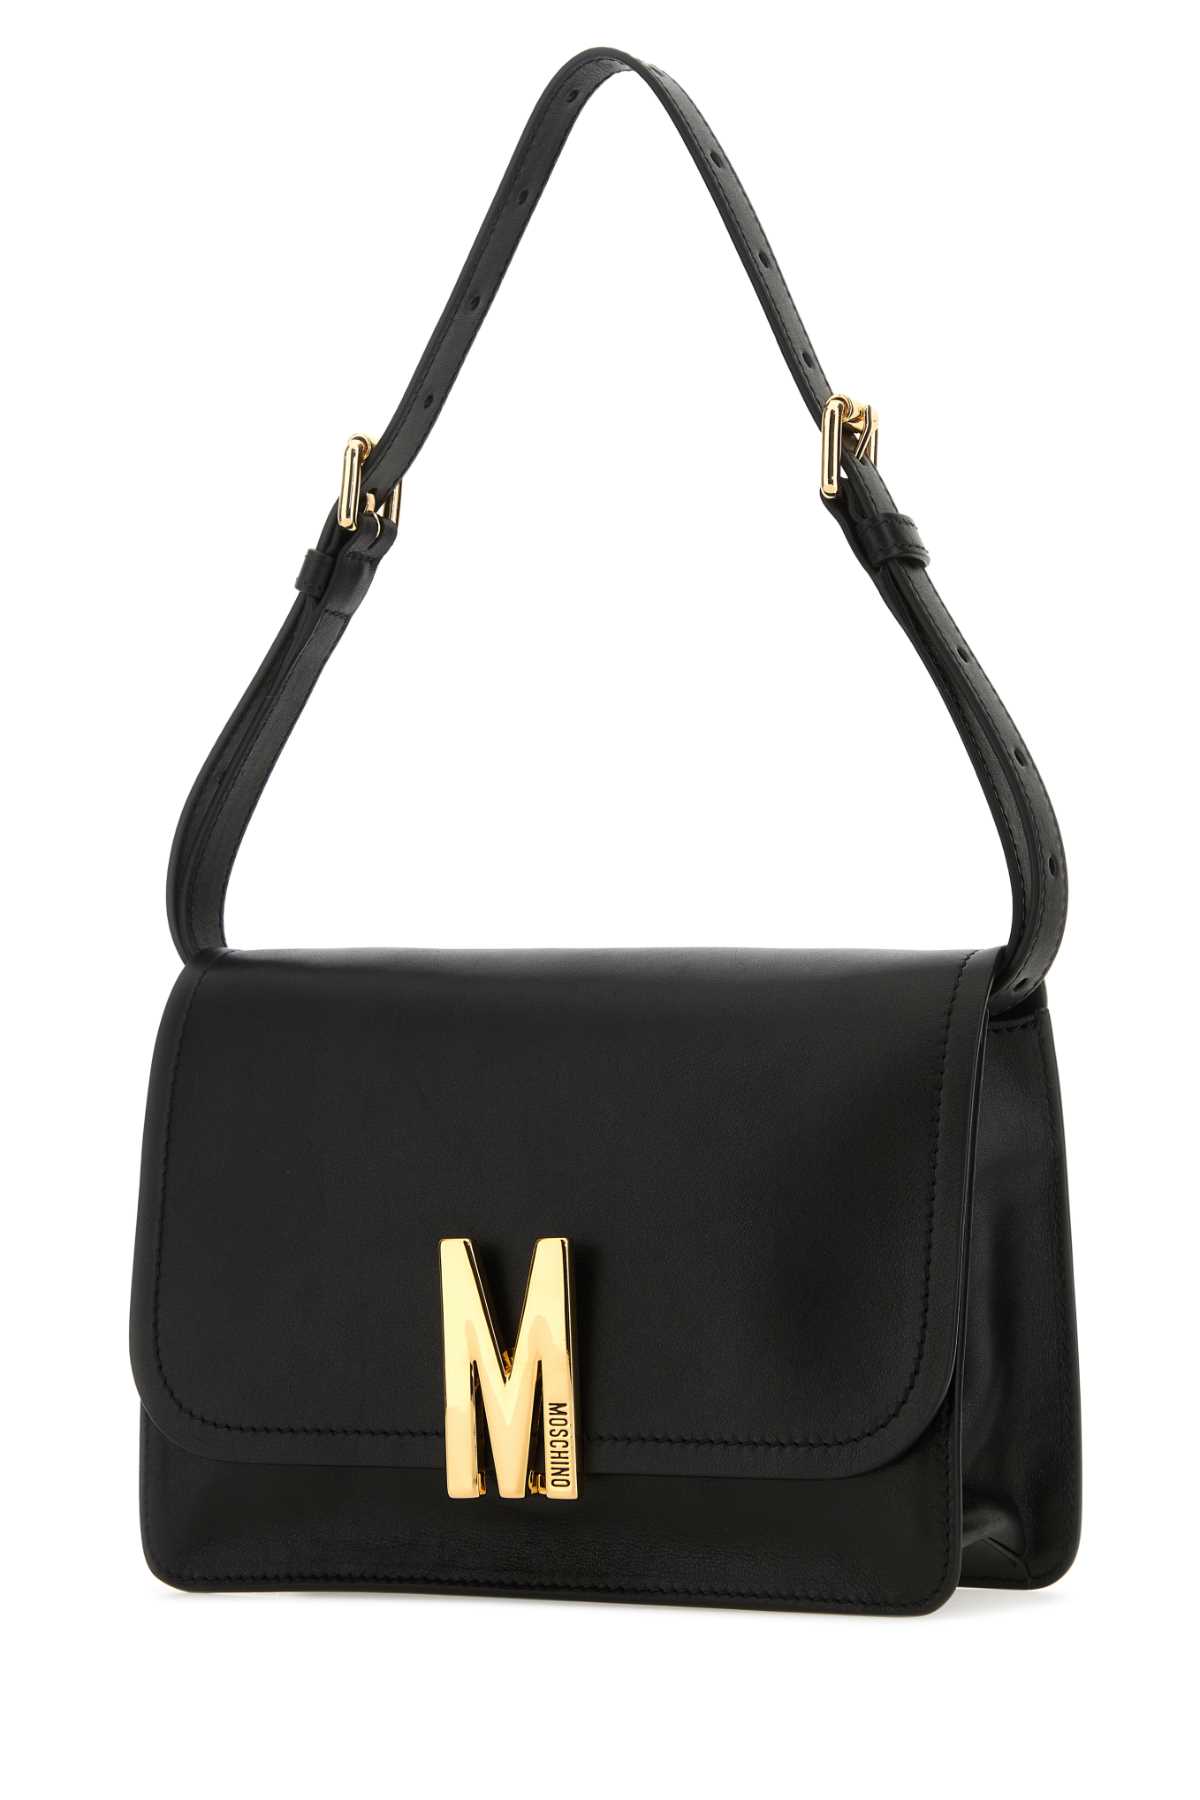 Moschino Black Leather M Bag Shoulder Bag In 0555